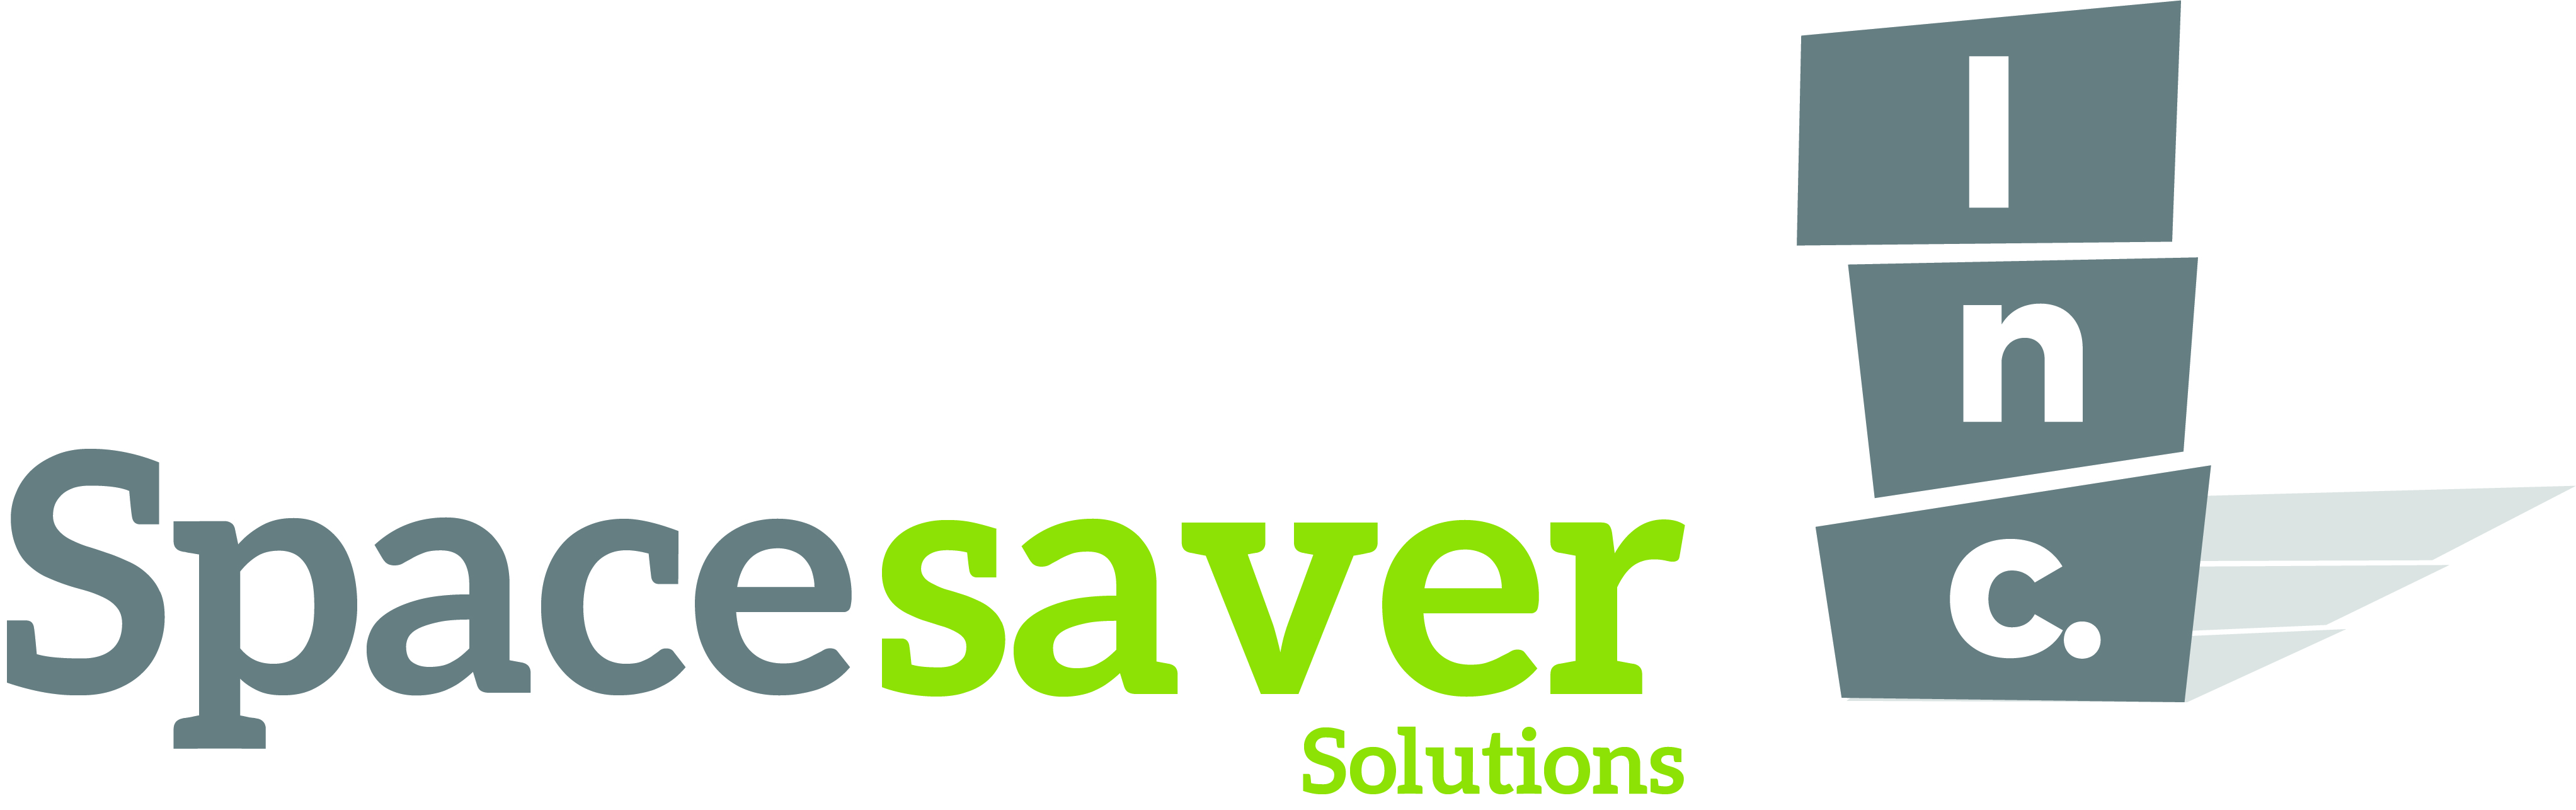 SpaceSaver Inc logo.